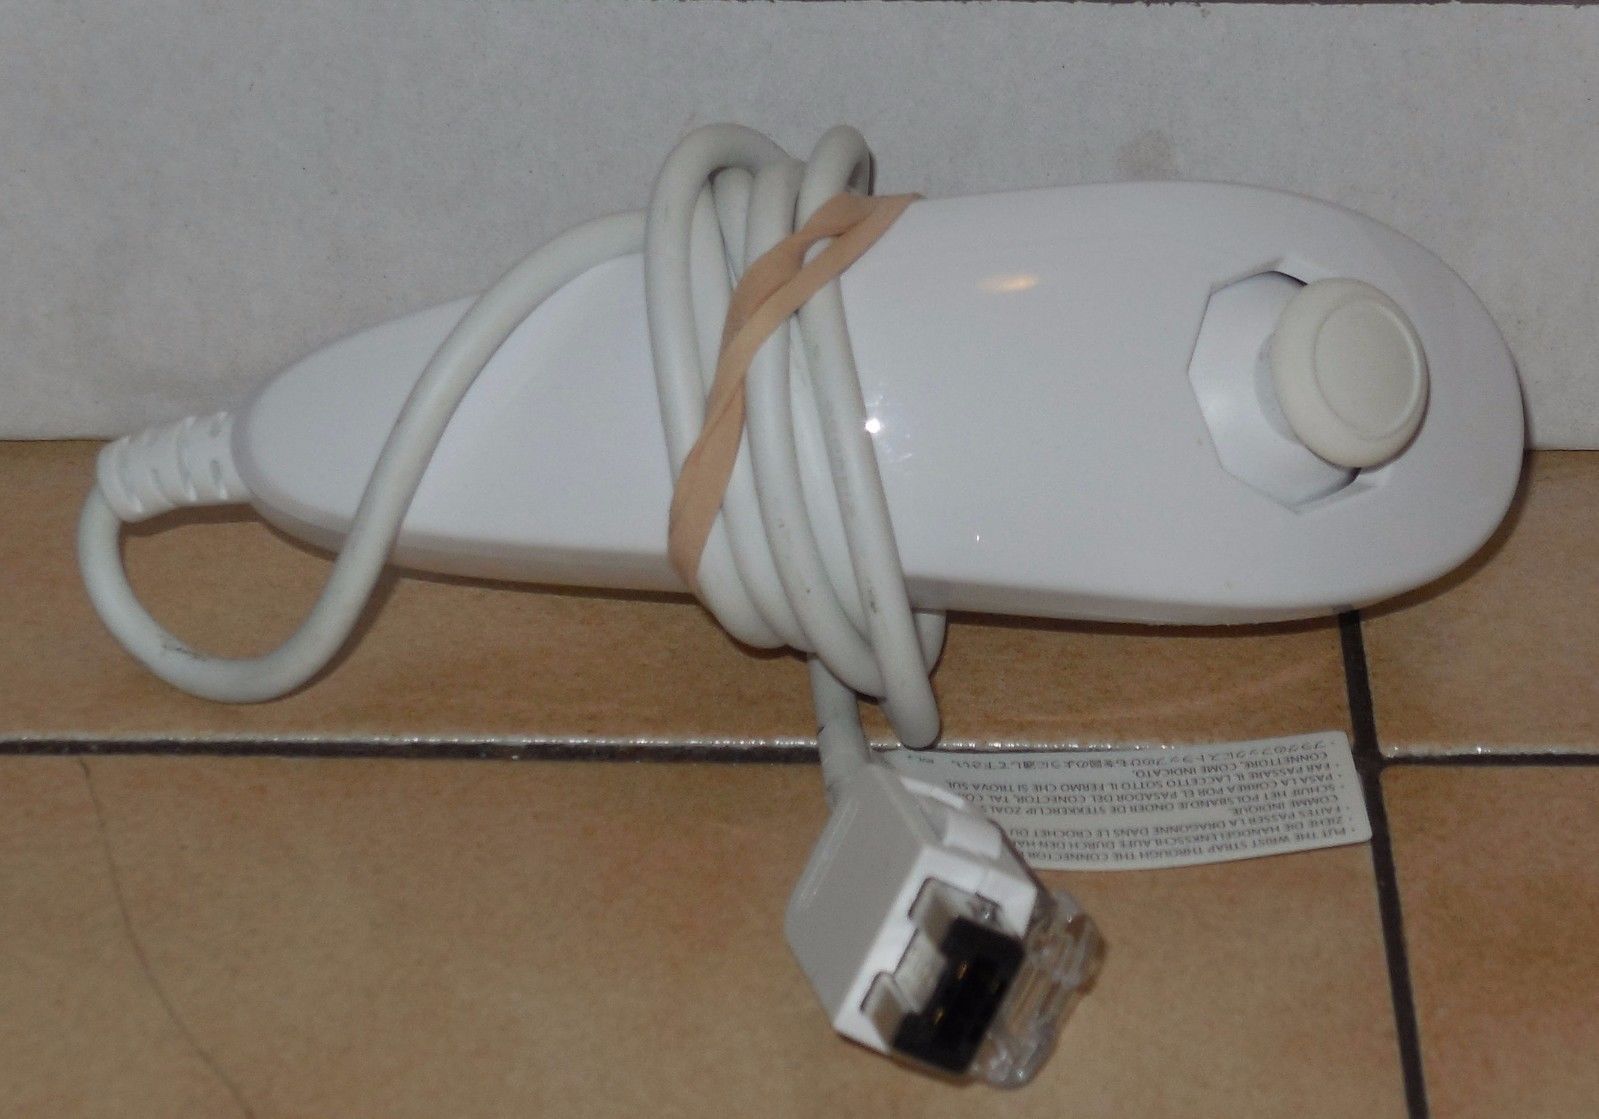 nunchuk nunchuck controller remote for Nintendo Wii - $8.91